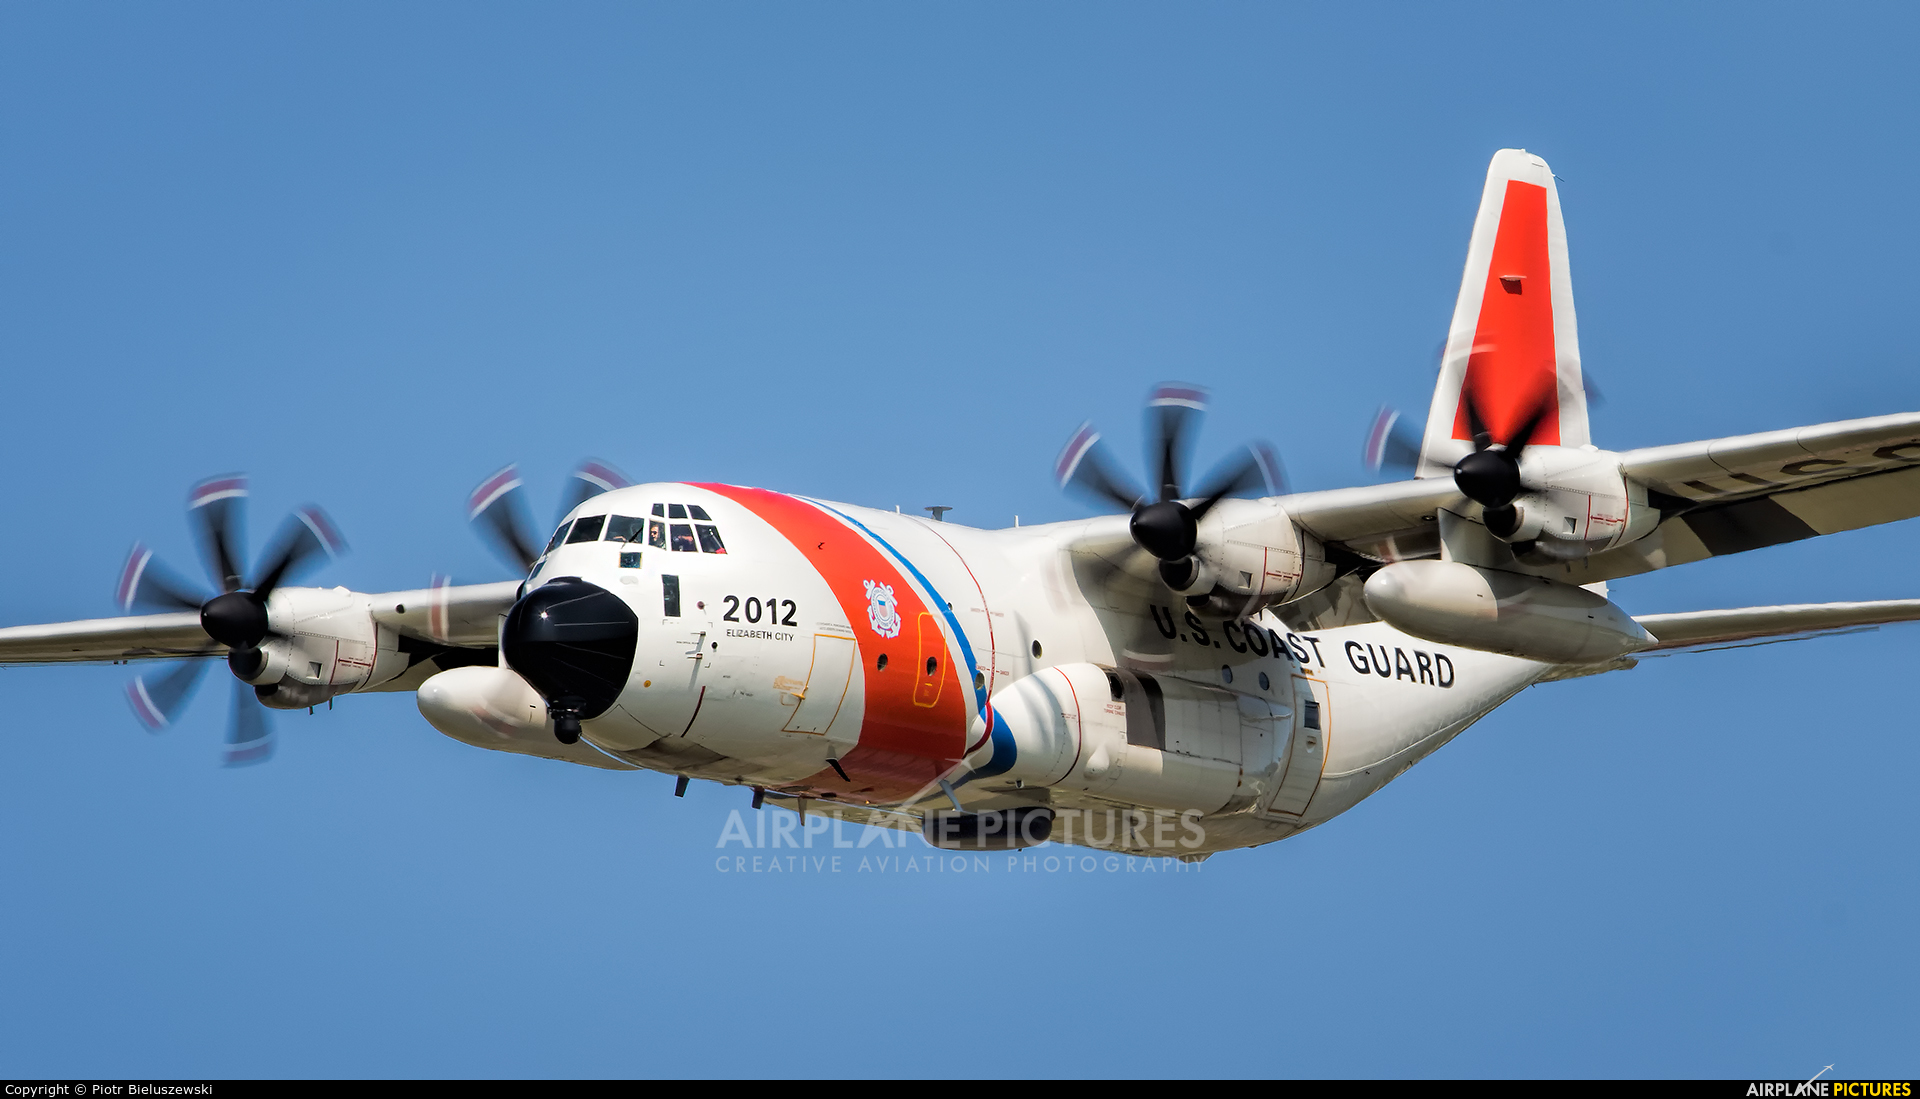 USA - Coast Guard 2012 aircraft at Oceana NAS